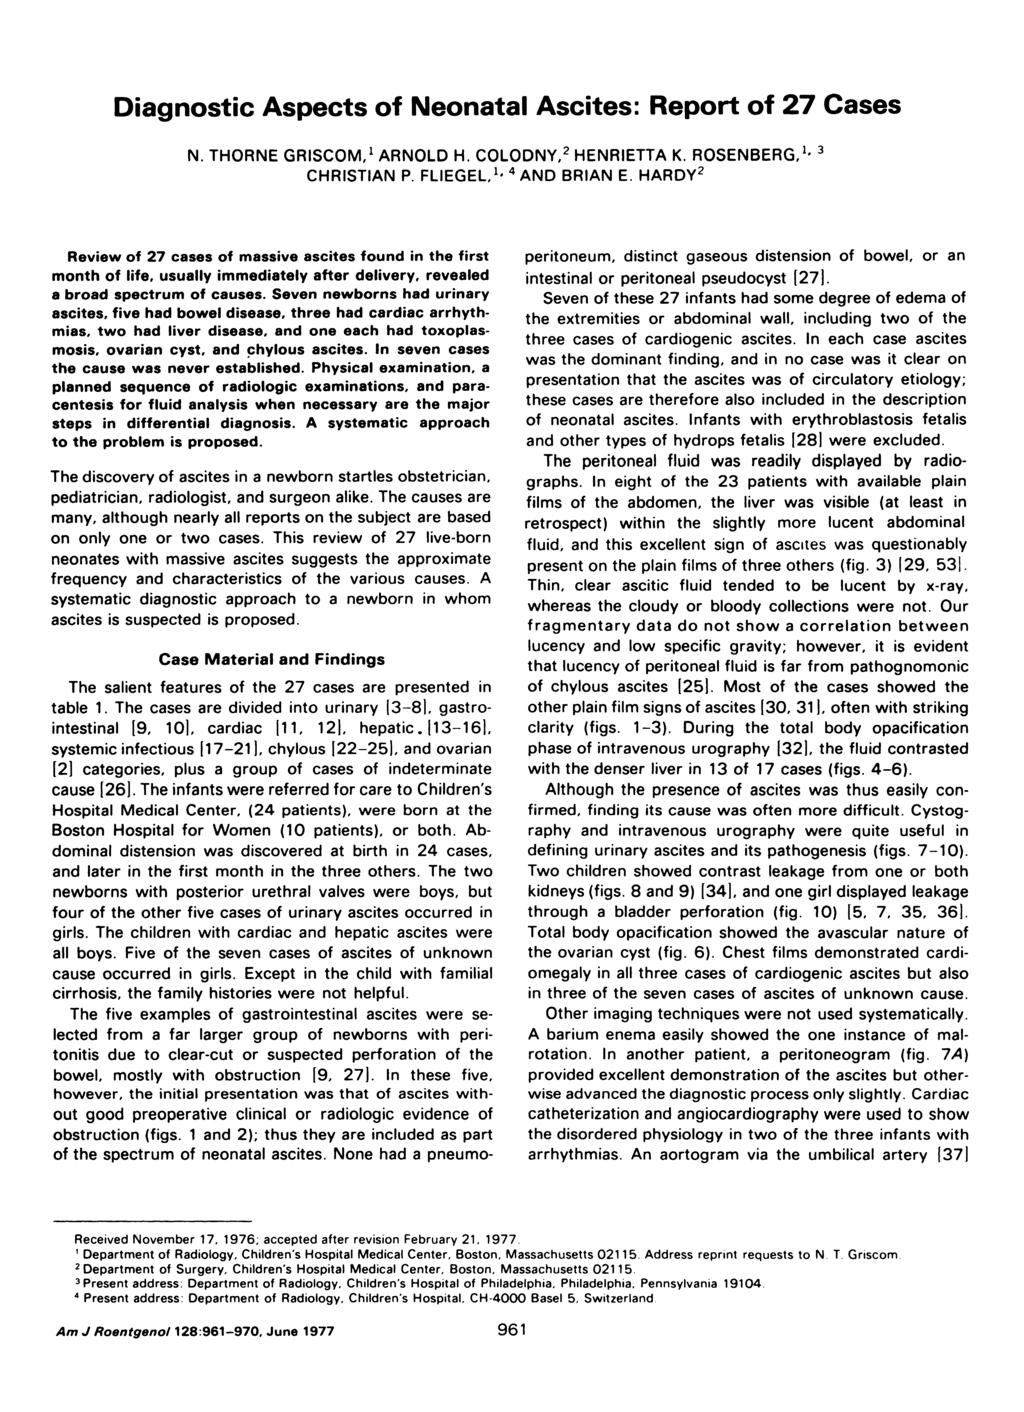 Diagnostic Aspects of Neonatal Ascites: Report of 27 Cases N. THORNE GRISCOM, ARNOLD H. COLODNY,2 HENRIETTA K. ROSENBERG, CHRISTIAN P. FLIEGEL, BRIAN E.